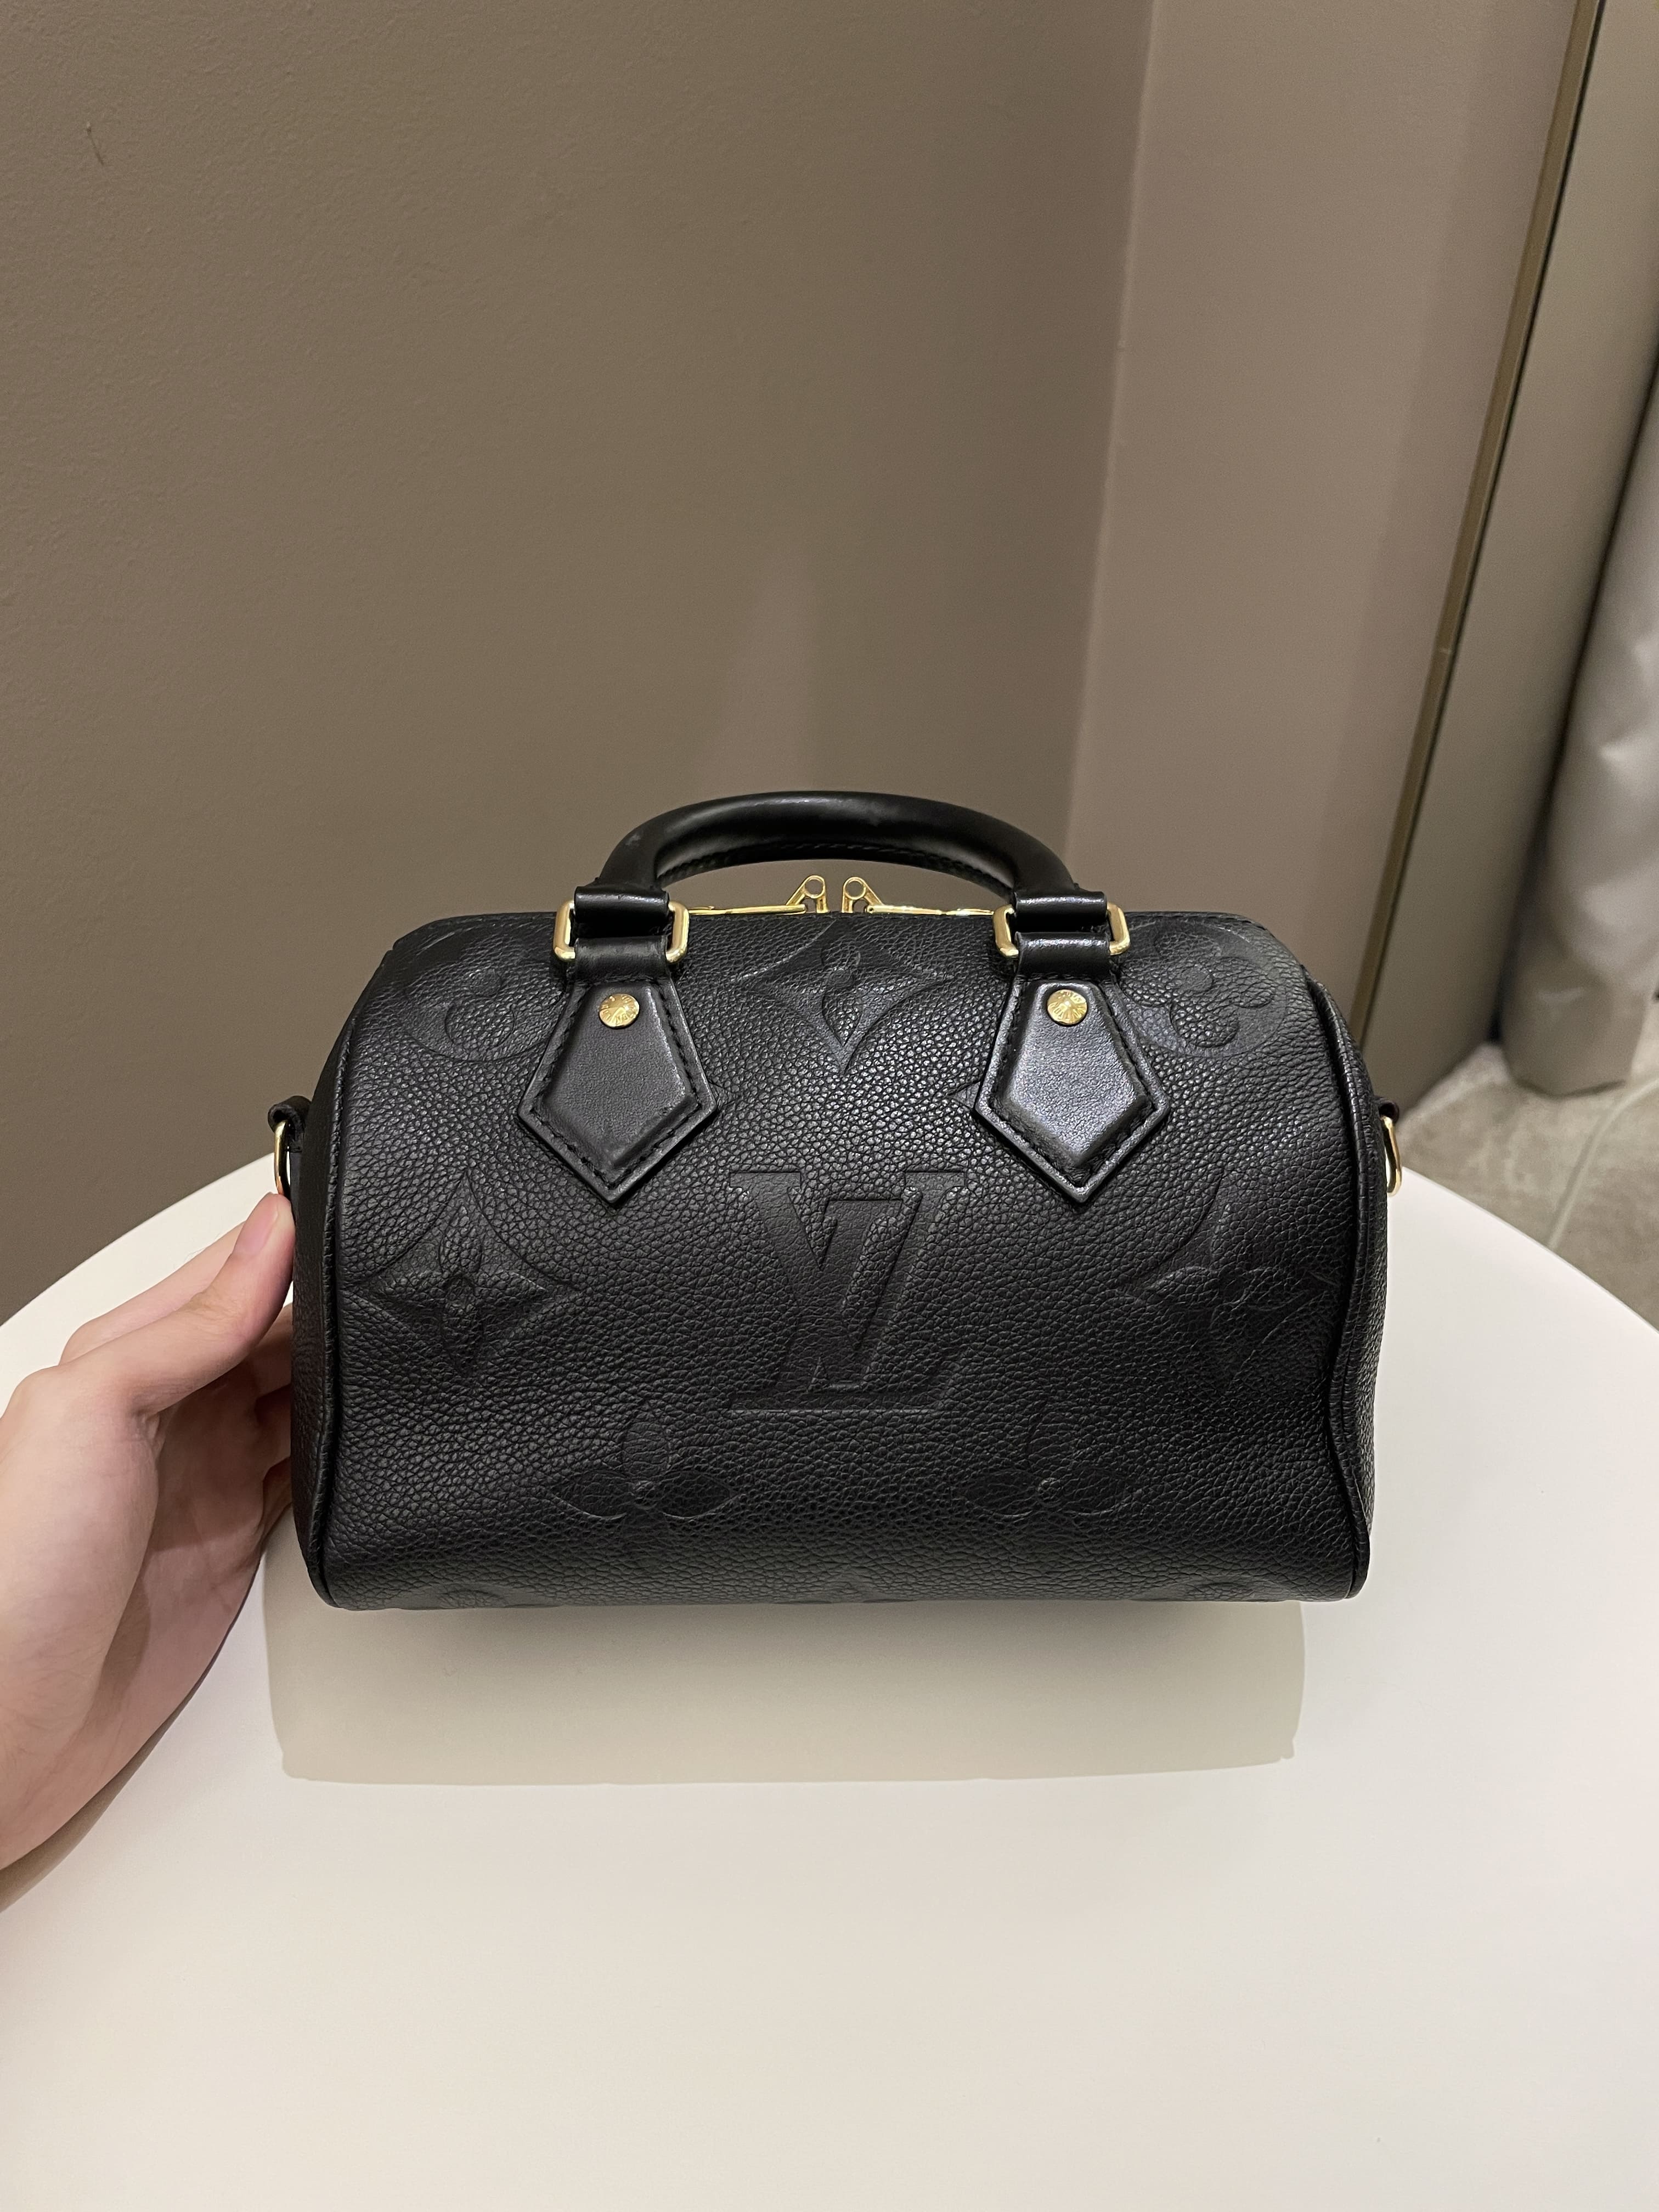 Louis Vuitton Empreinte Leather Noir Speedy 20 Bandouliere